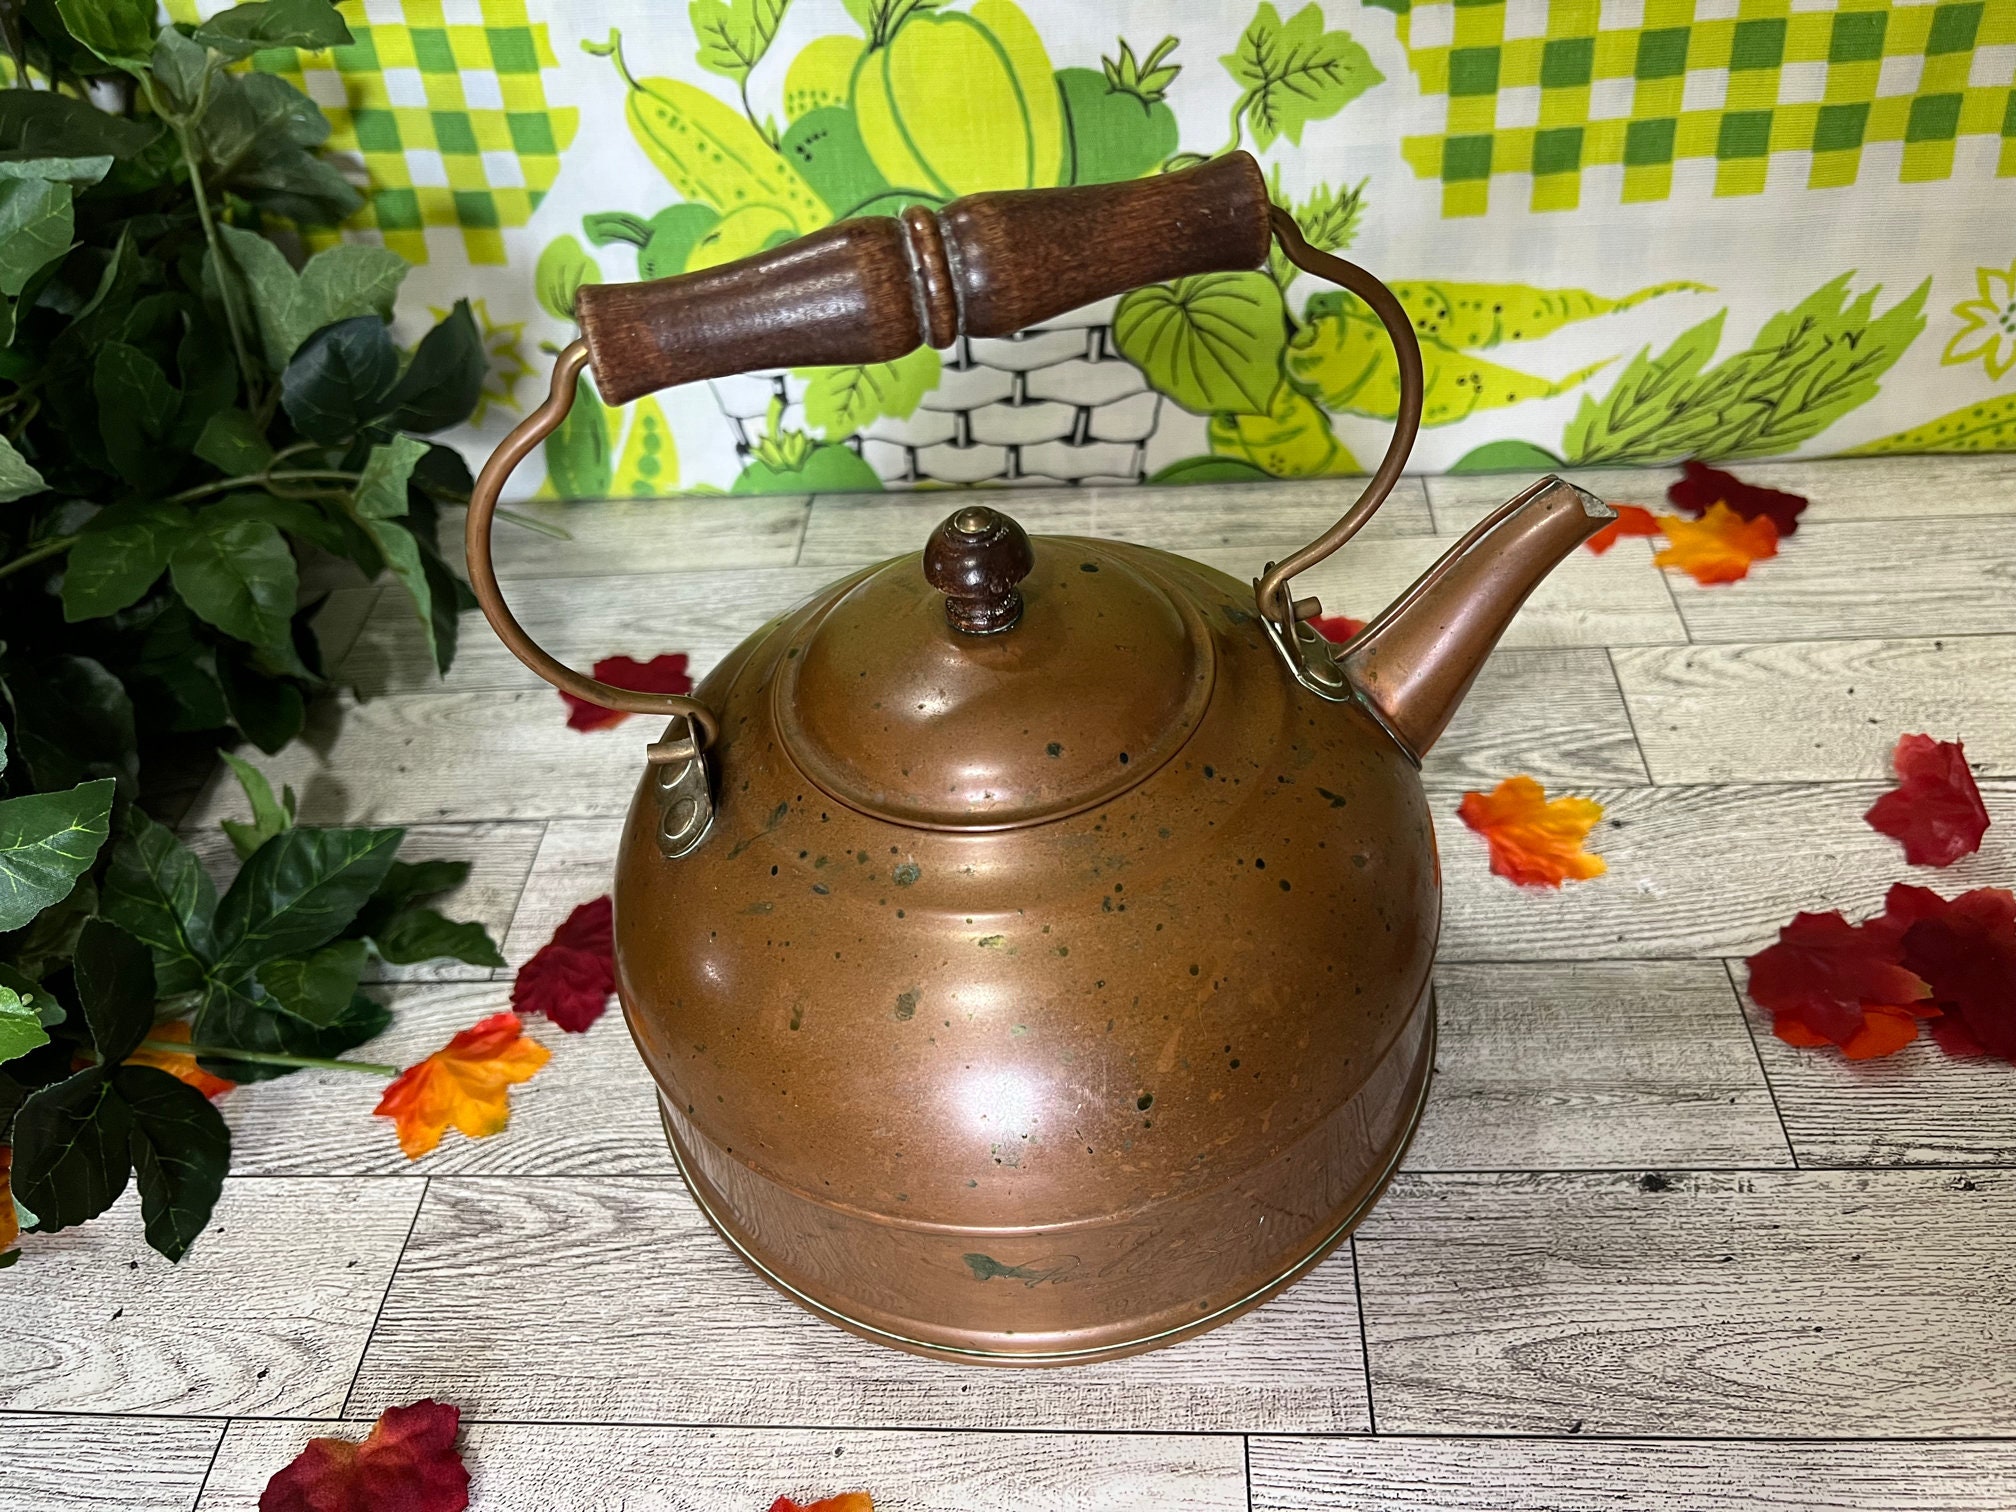 Vintage Revere Ware Whistling Tea Kettle Made In USA Rome New York